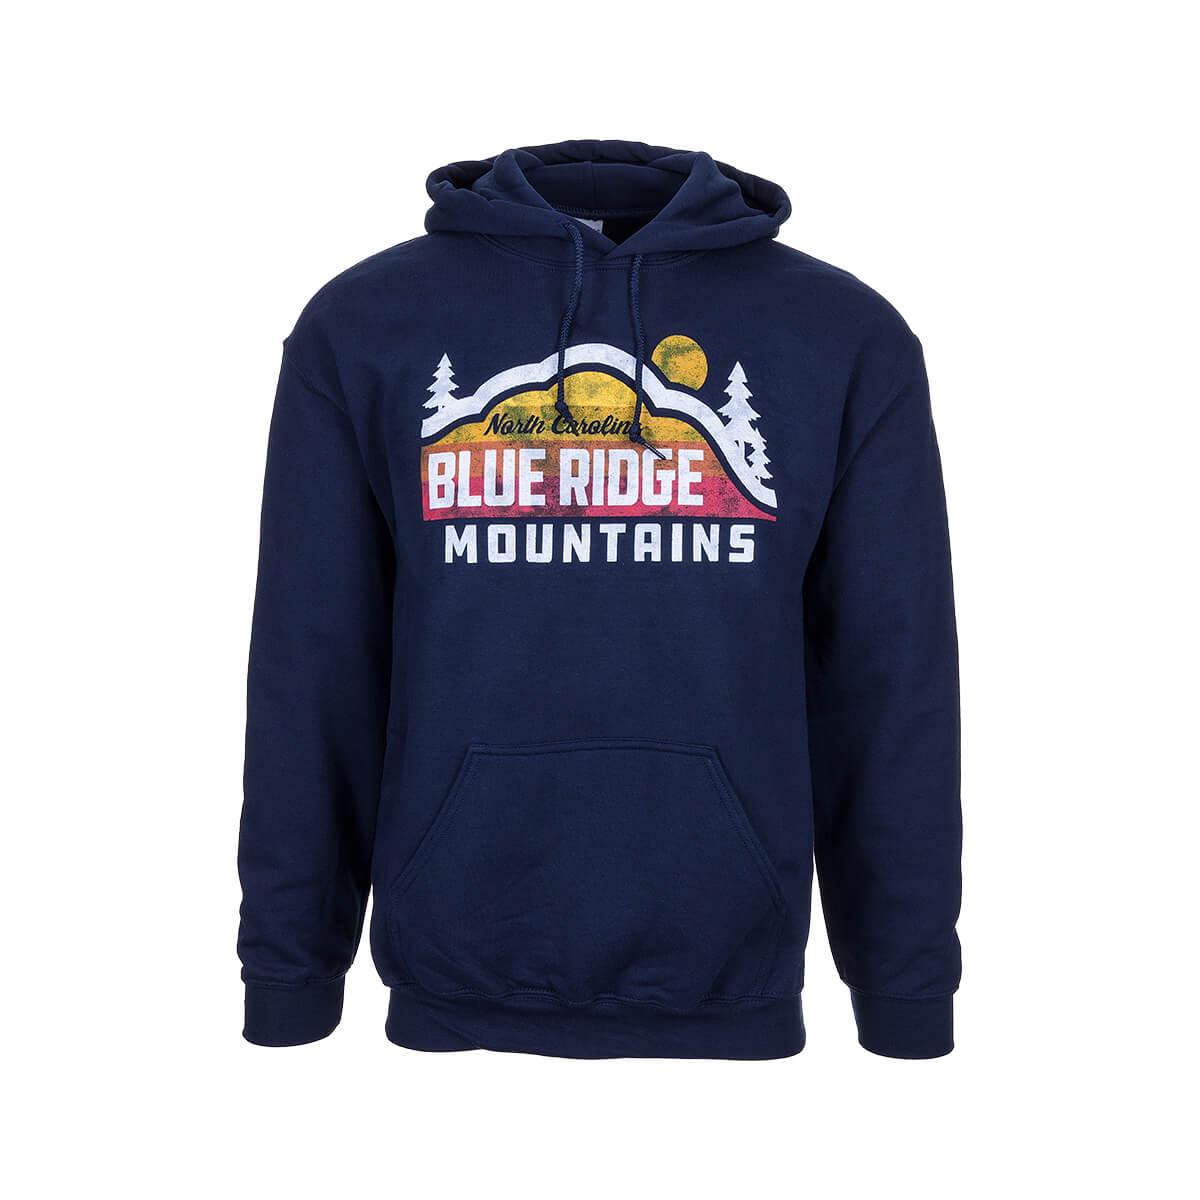  Blue Ridge Mountains Hoodie